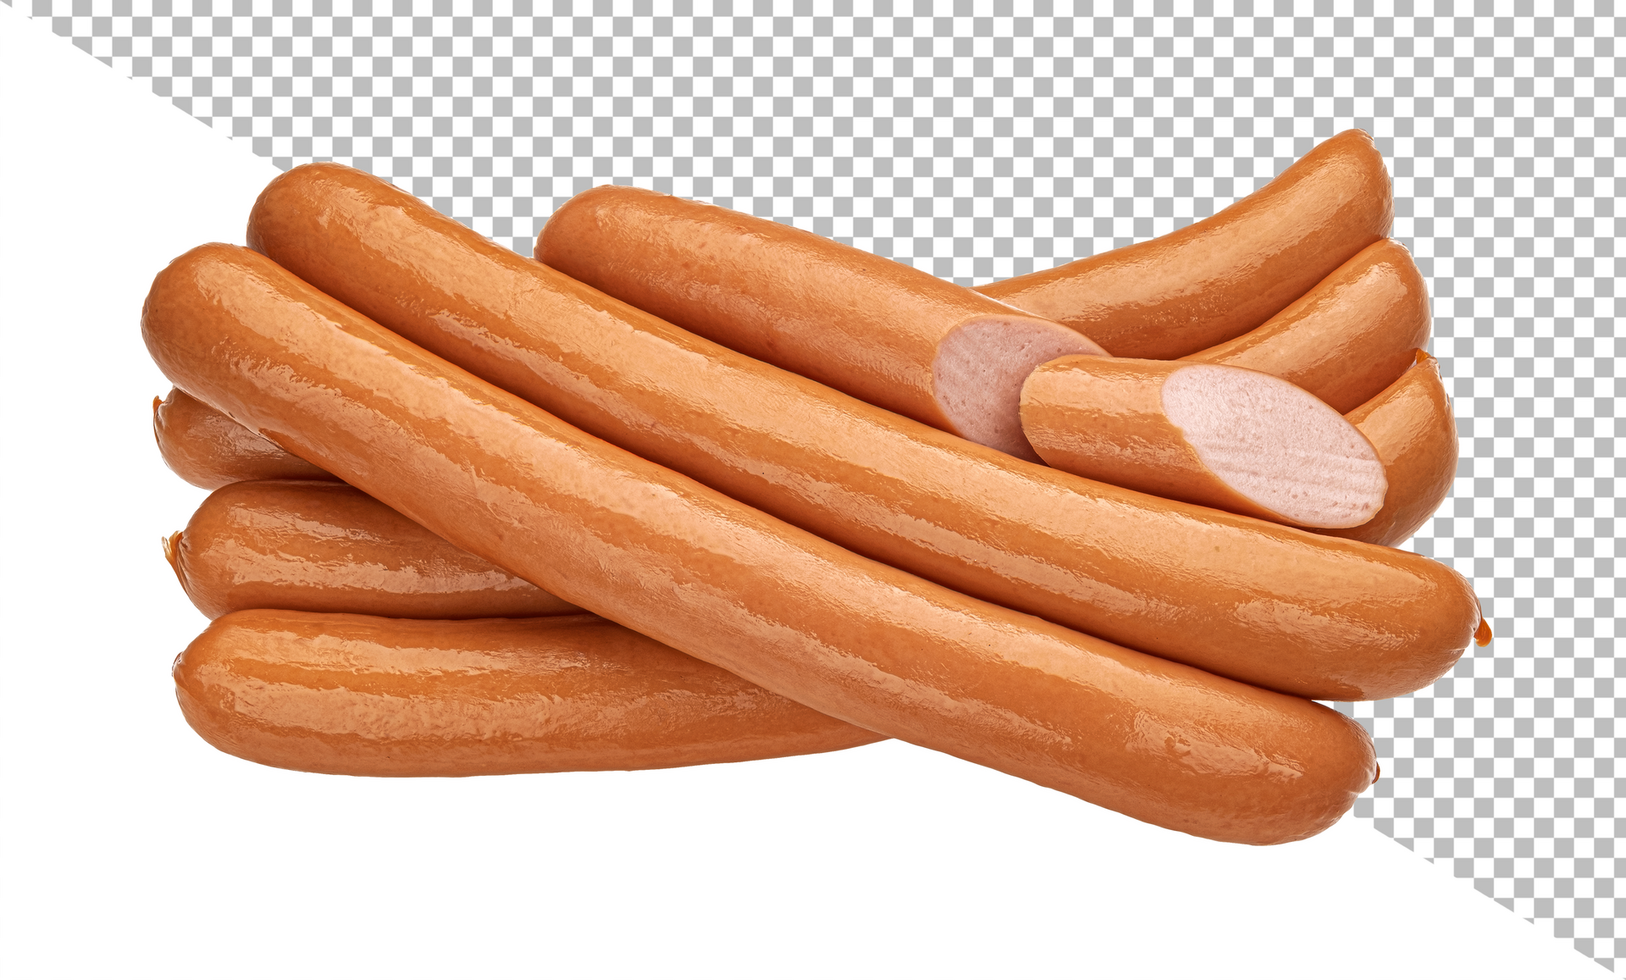 Hot dog sausage isolated on white background psd